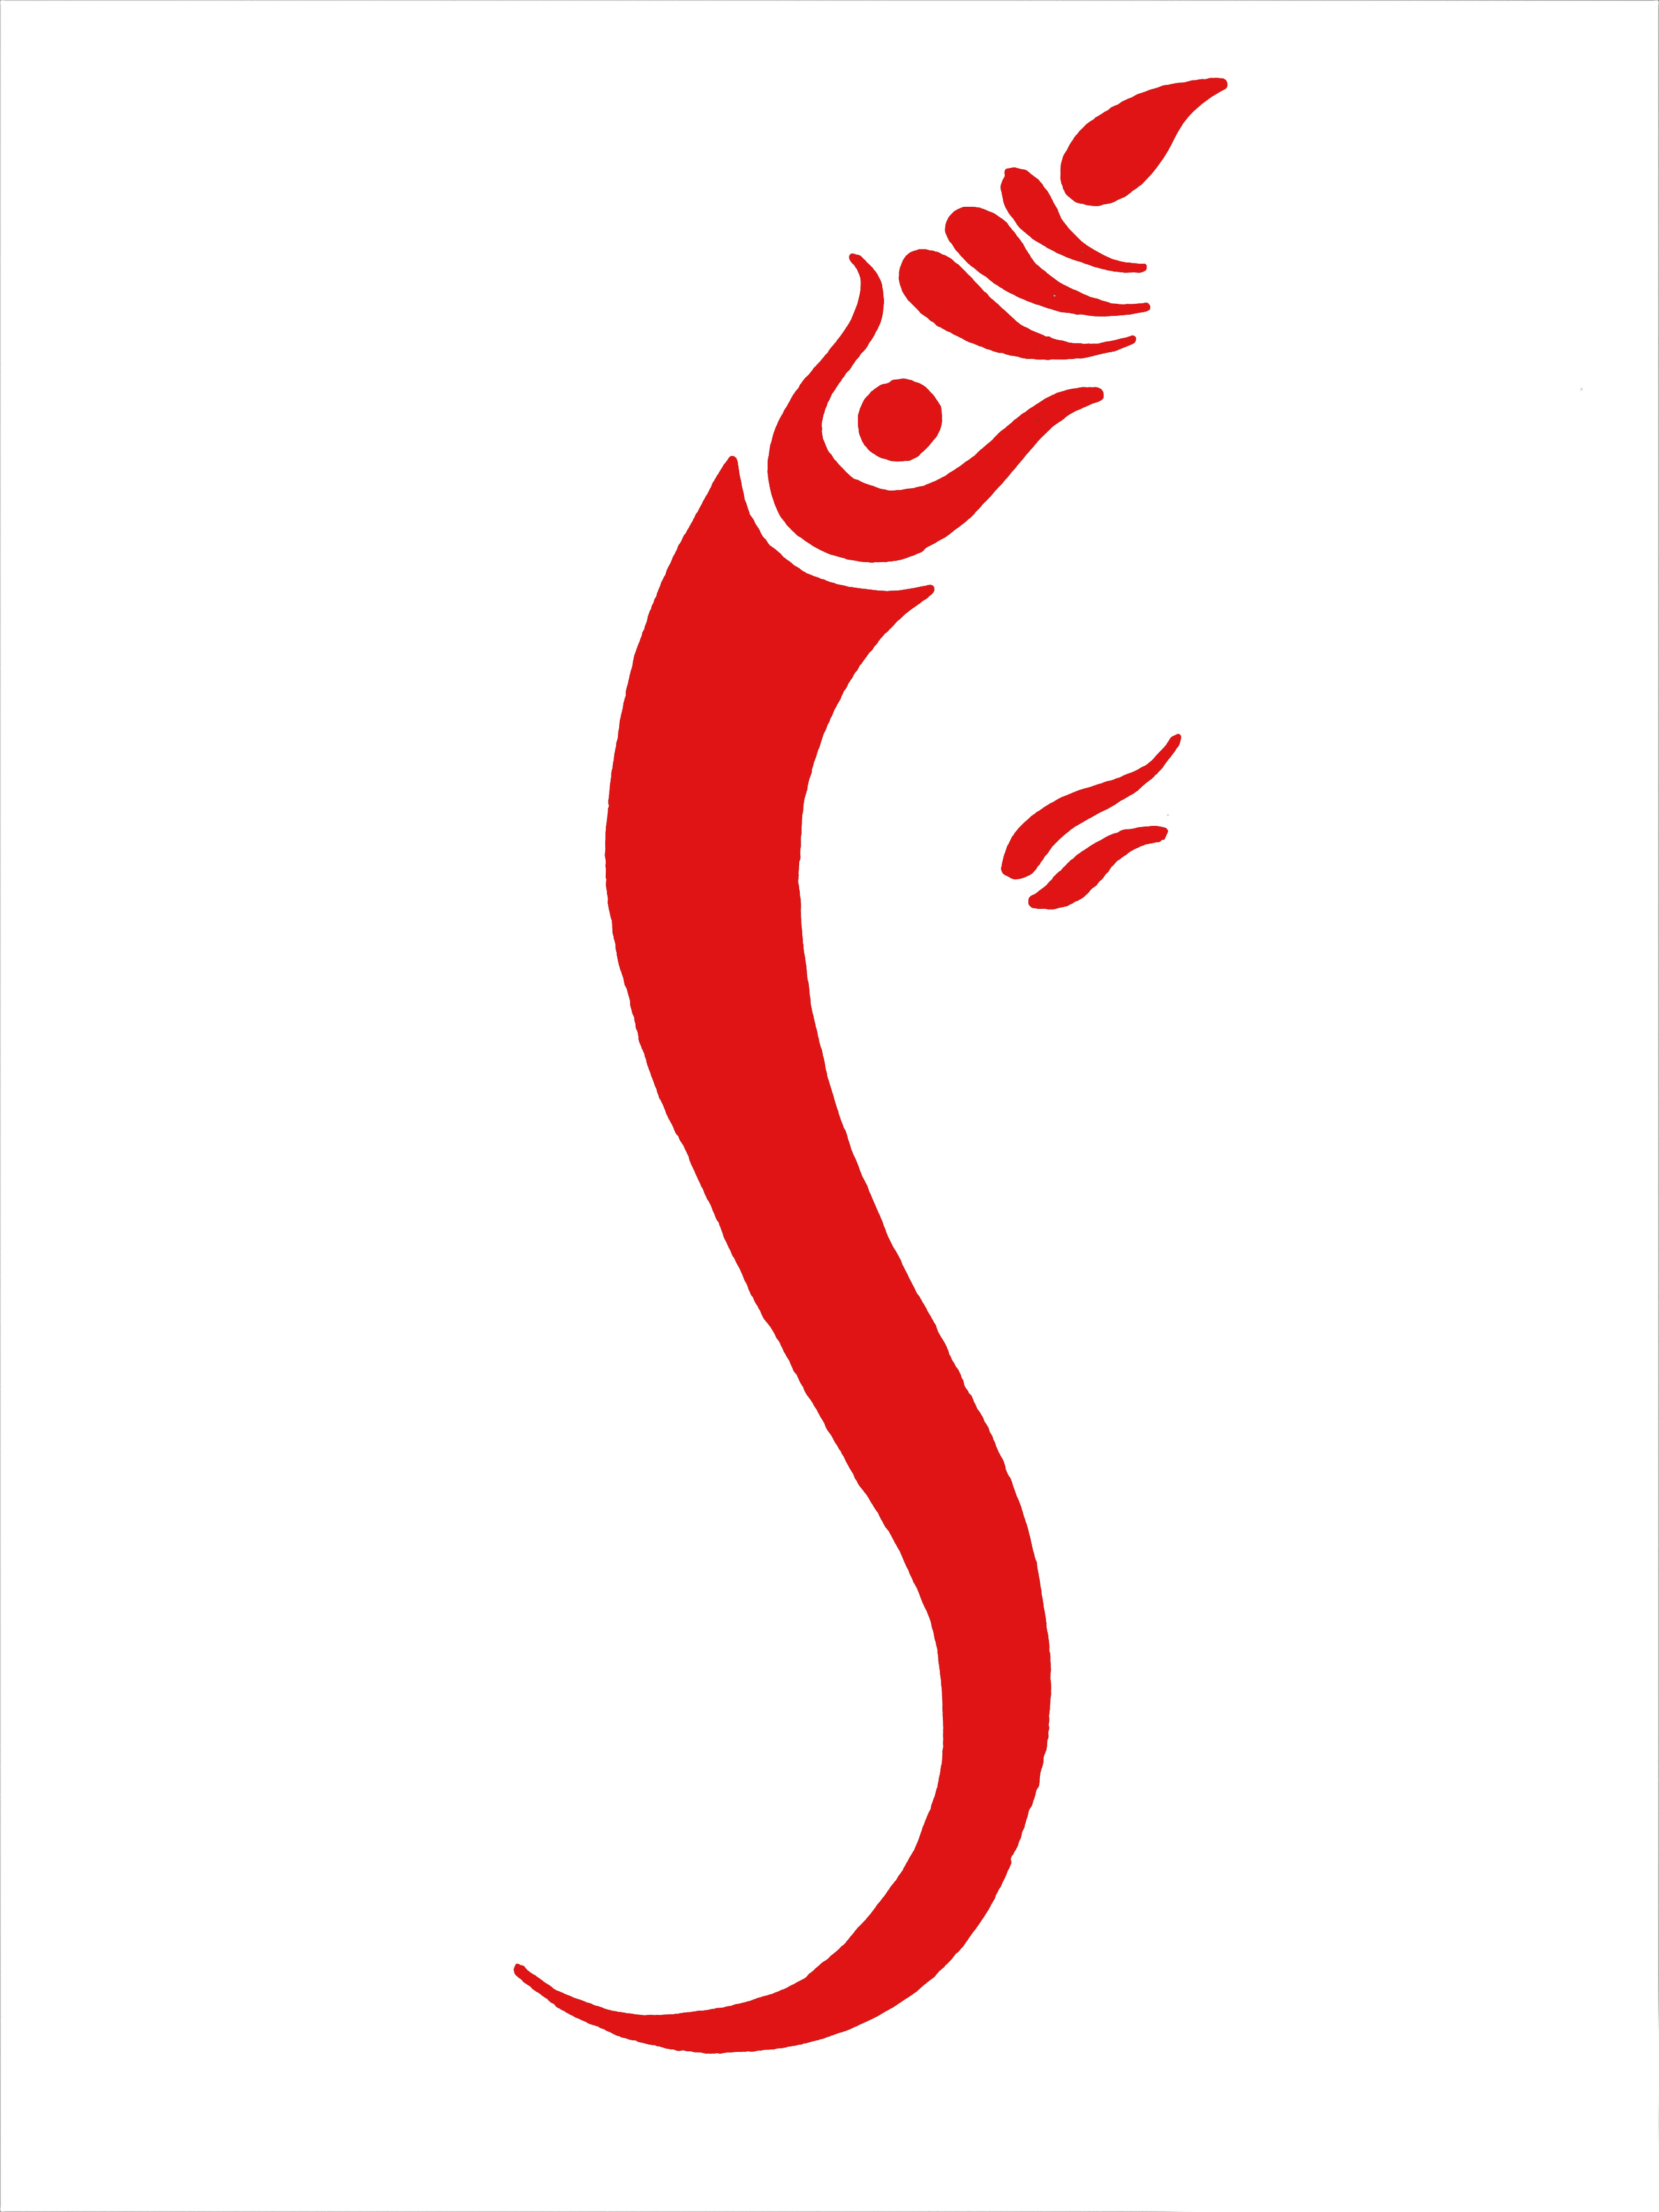 Ganesh logo clipart